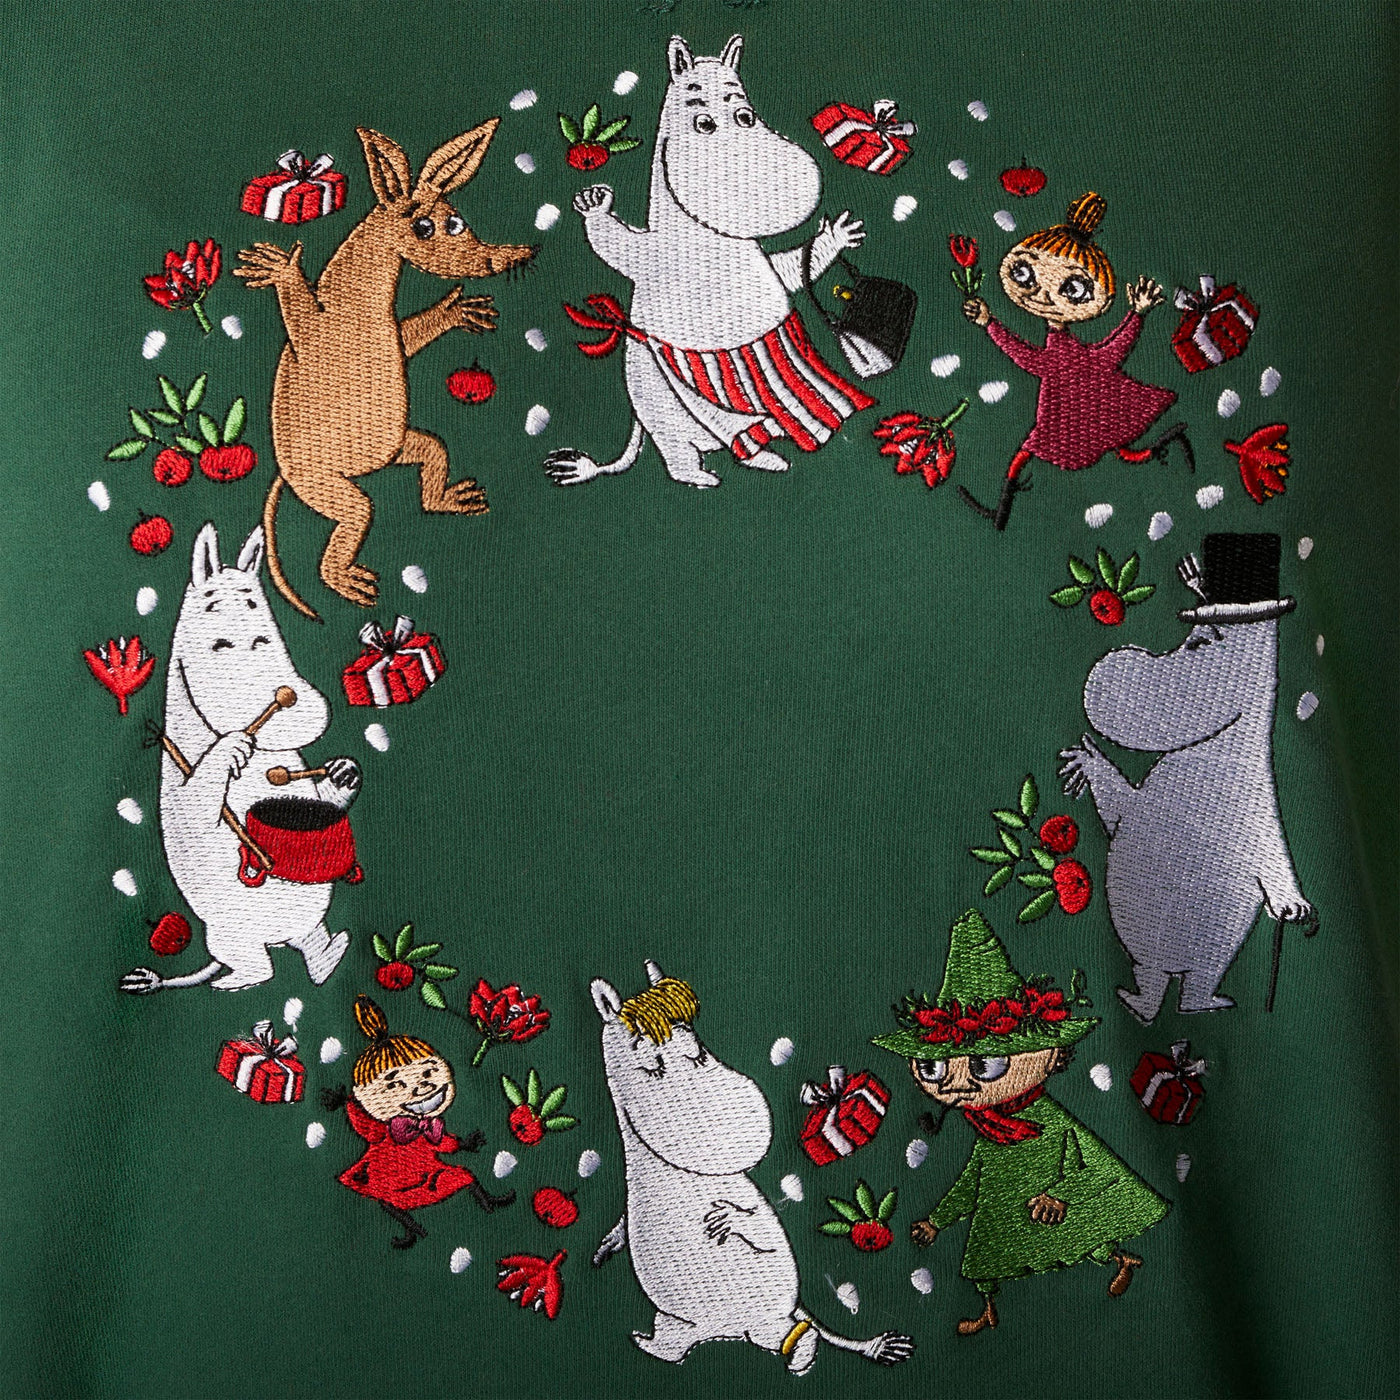 Men's Moomin Green Christmas Sweatshirt